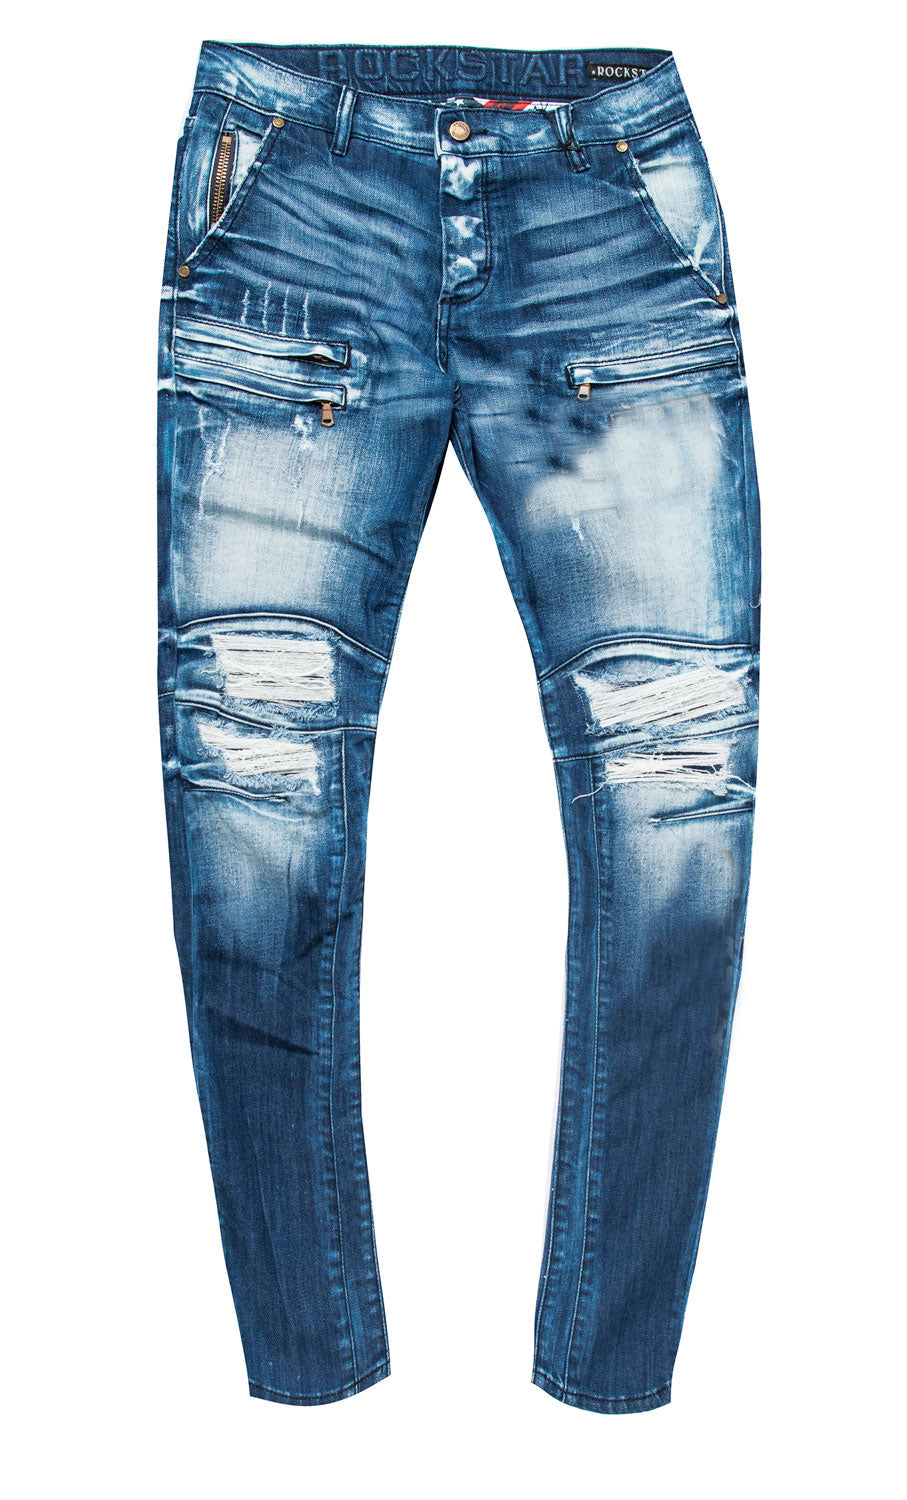 Thompson Biker Jeans (Blue) – Rockstar Original